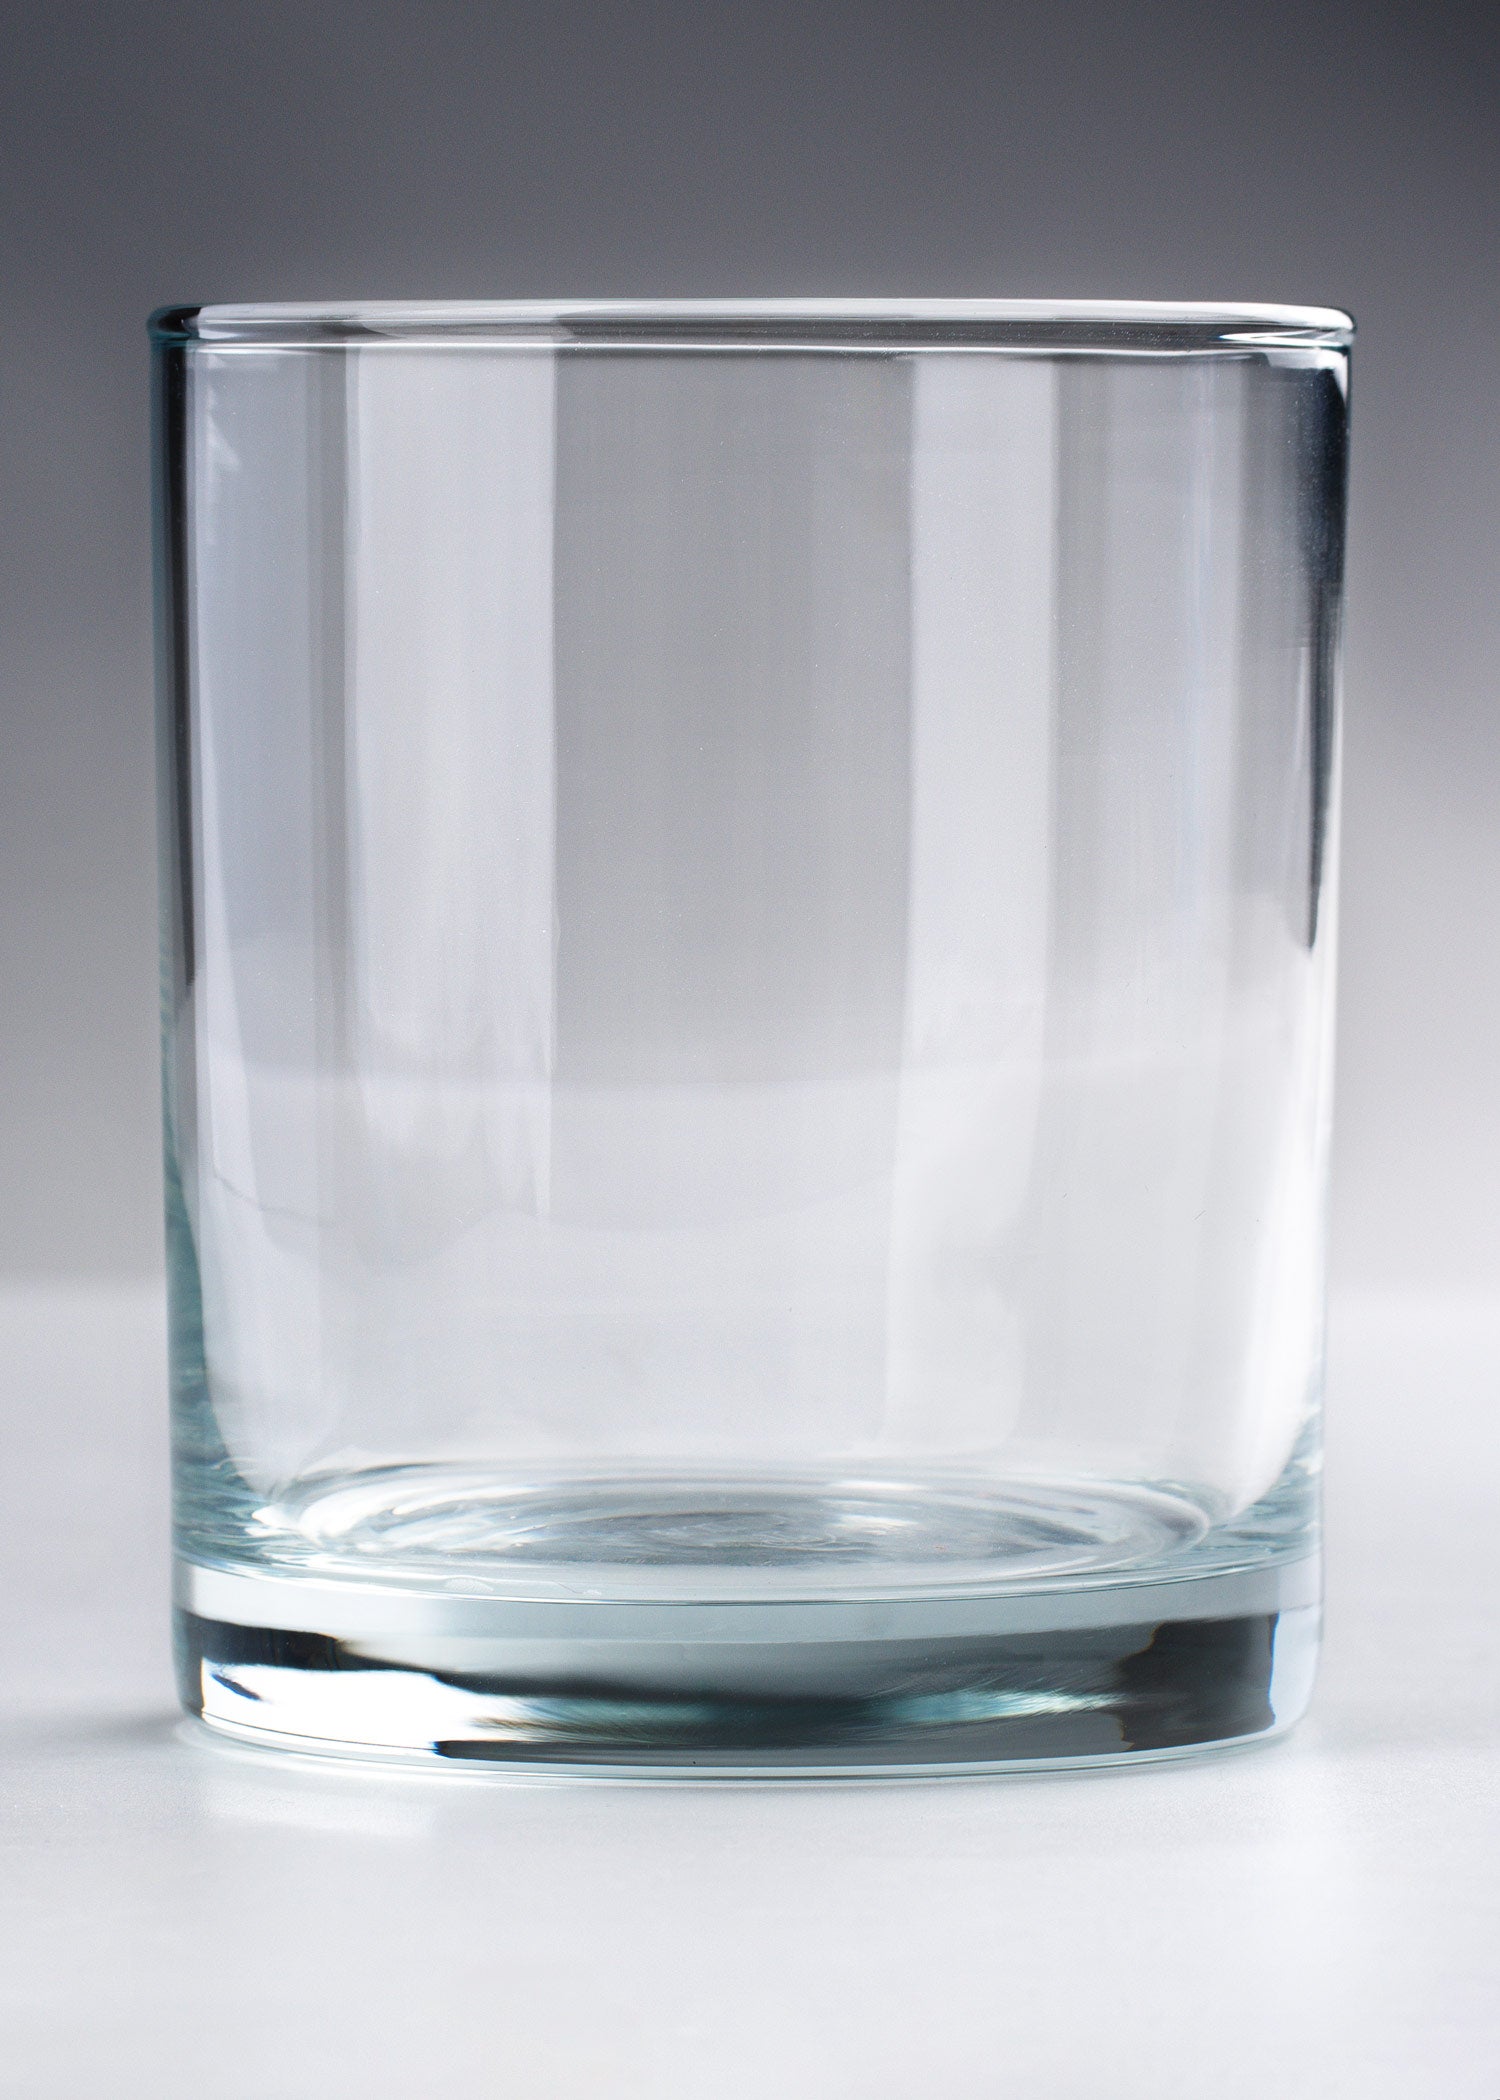 precio vaso vidrio templado maha